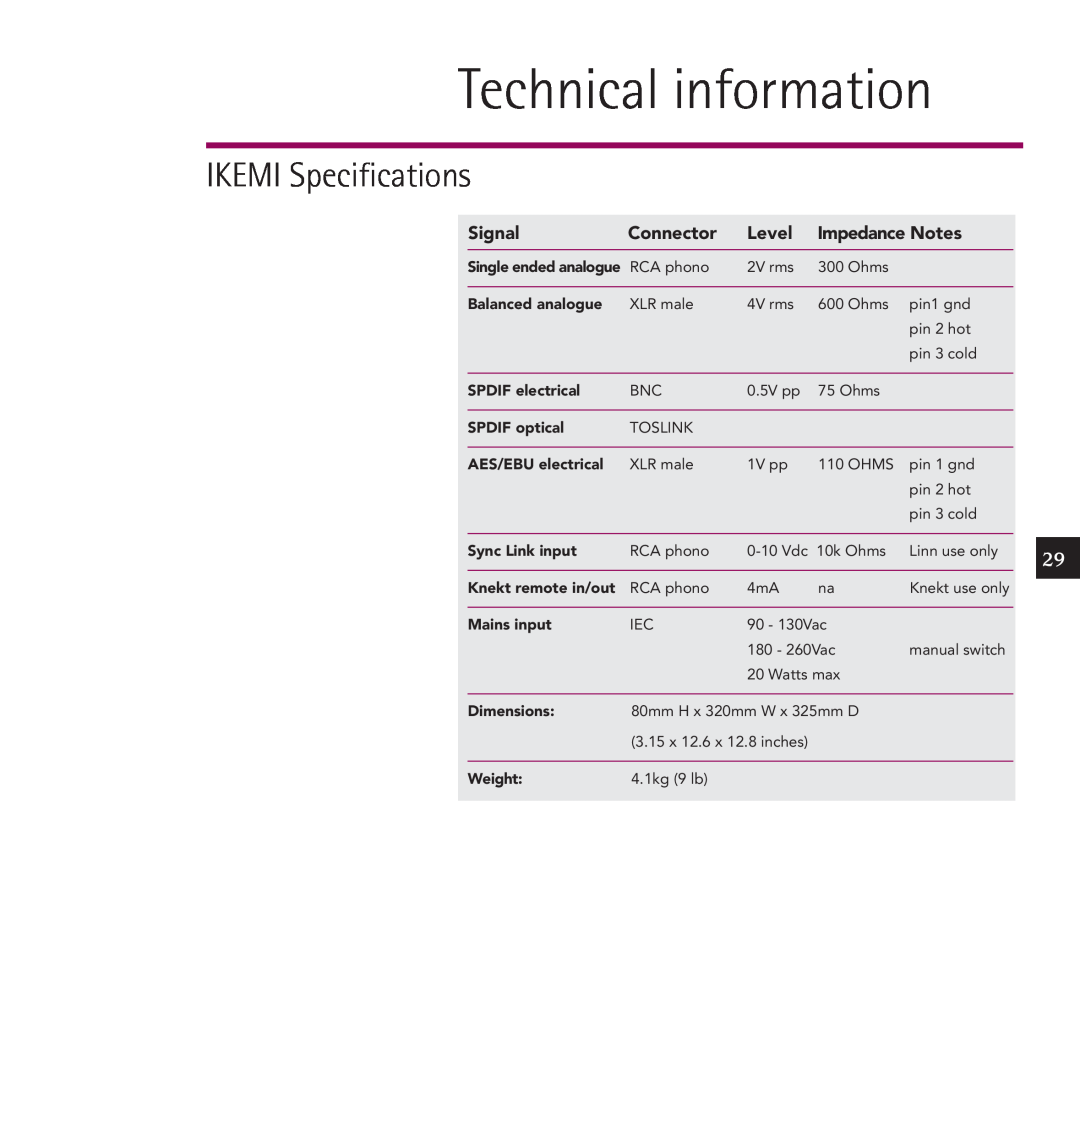 Linn IKEMI & GENKI Technical information, IKEMI Specifications, Signal, Connector, Level, Impedance Notes, SPDIF optical 